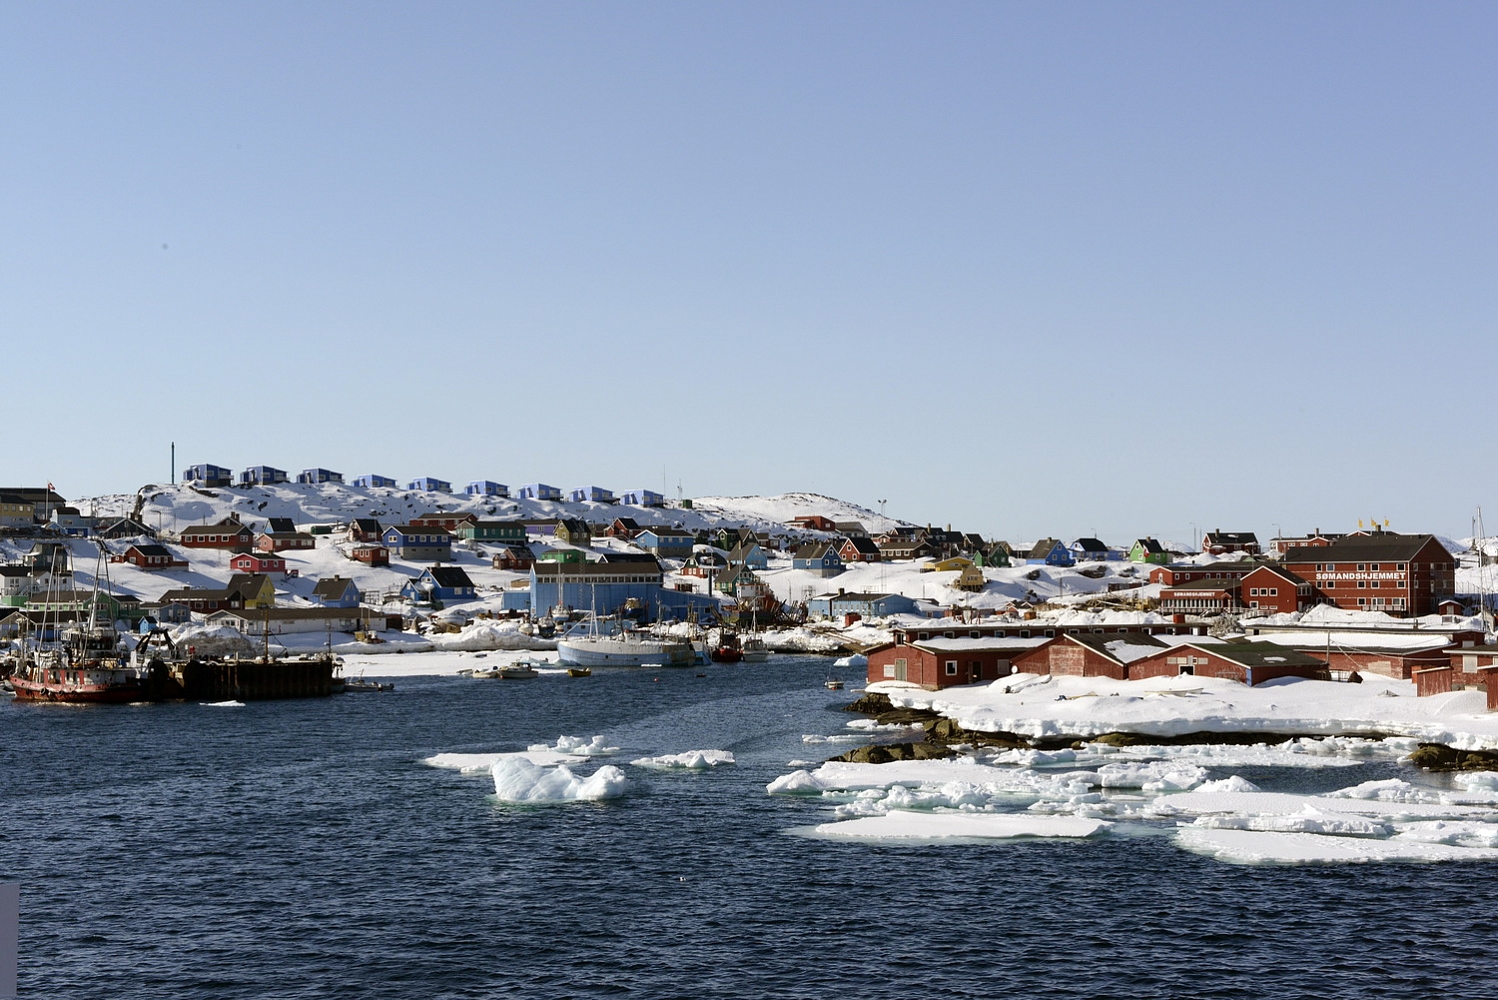 Dolph Kessler - Sarfaq Ittuk, Greenland  